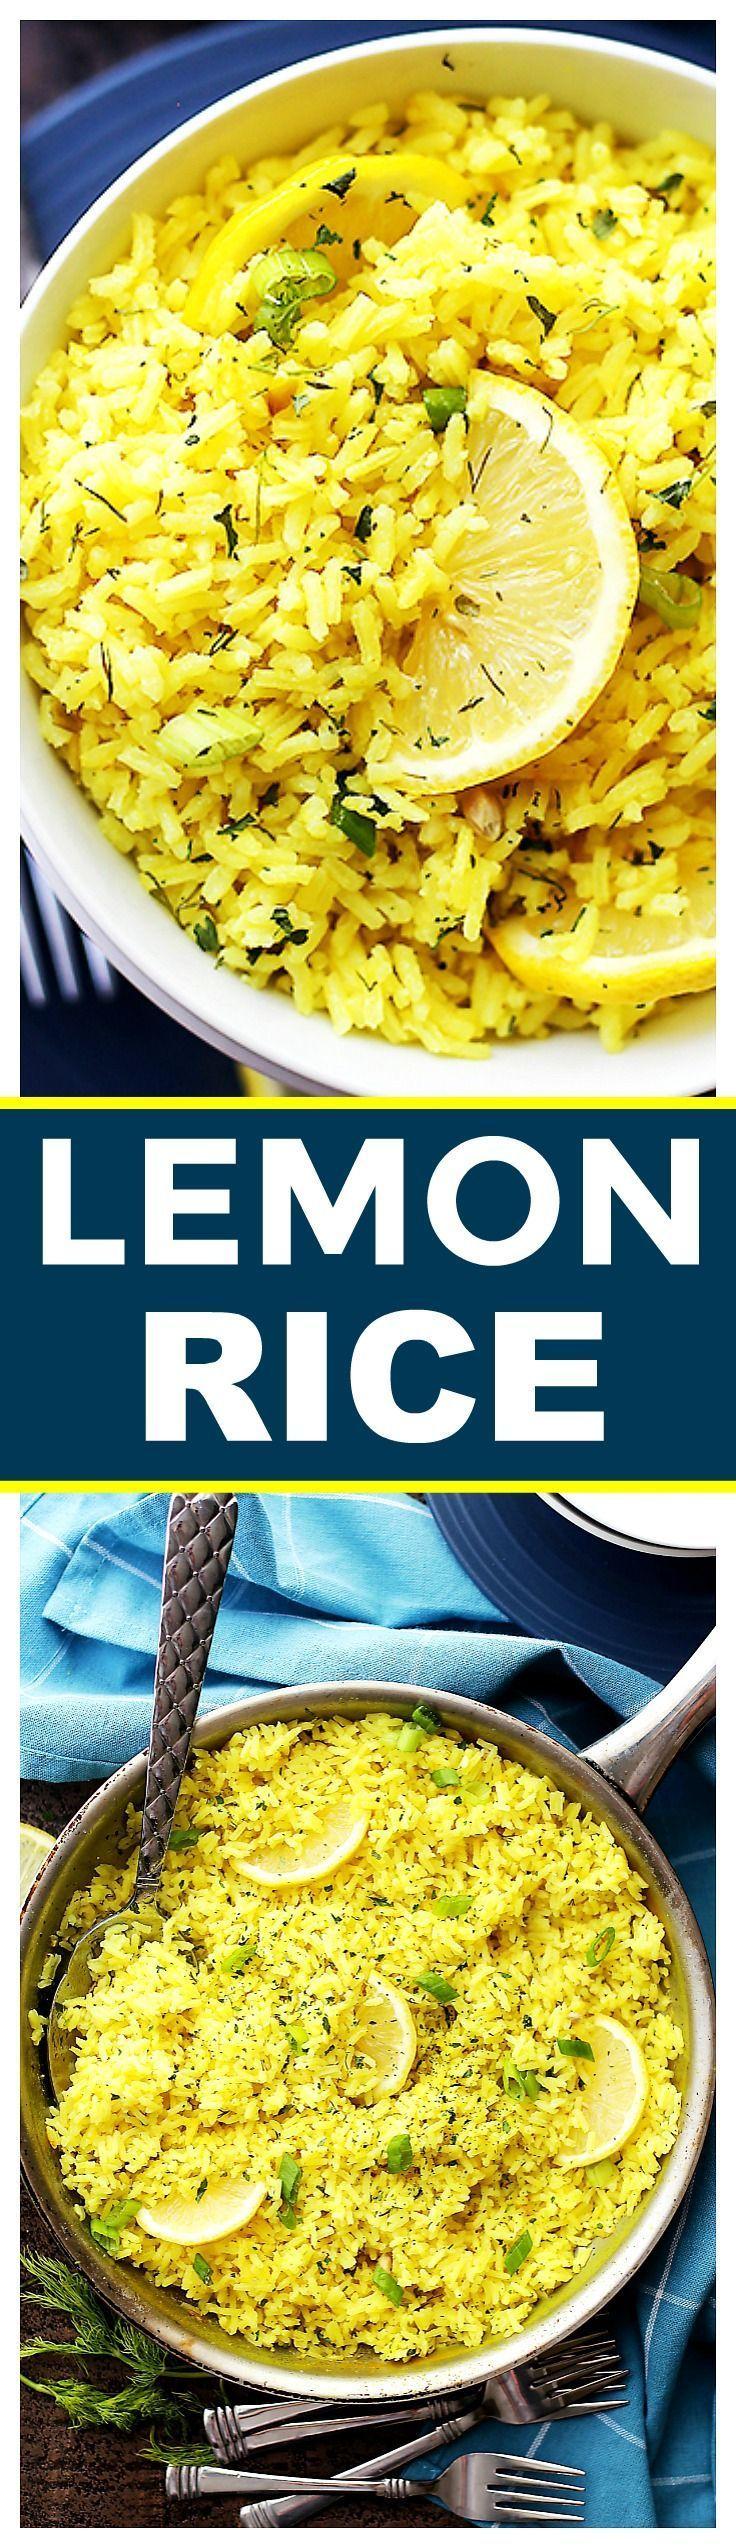 Wedding - Lemon Rice